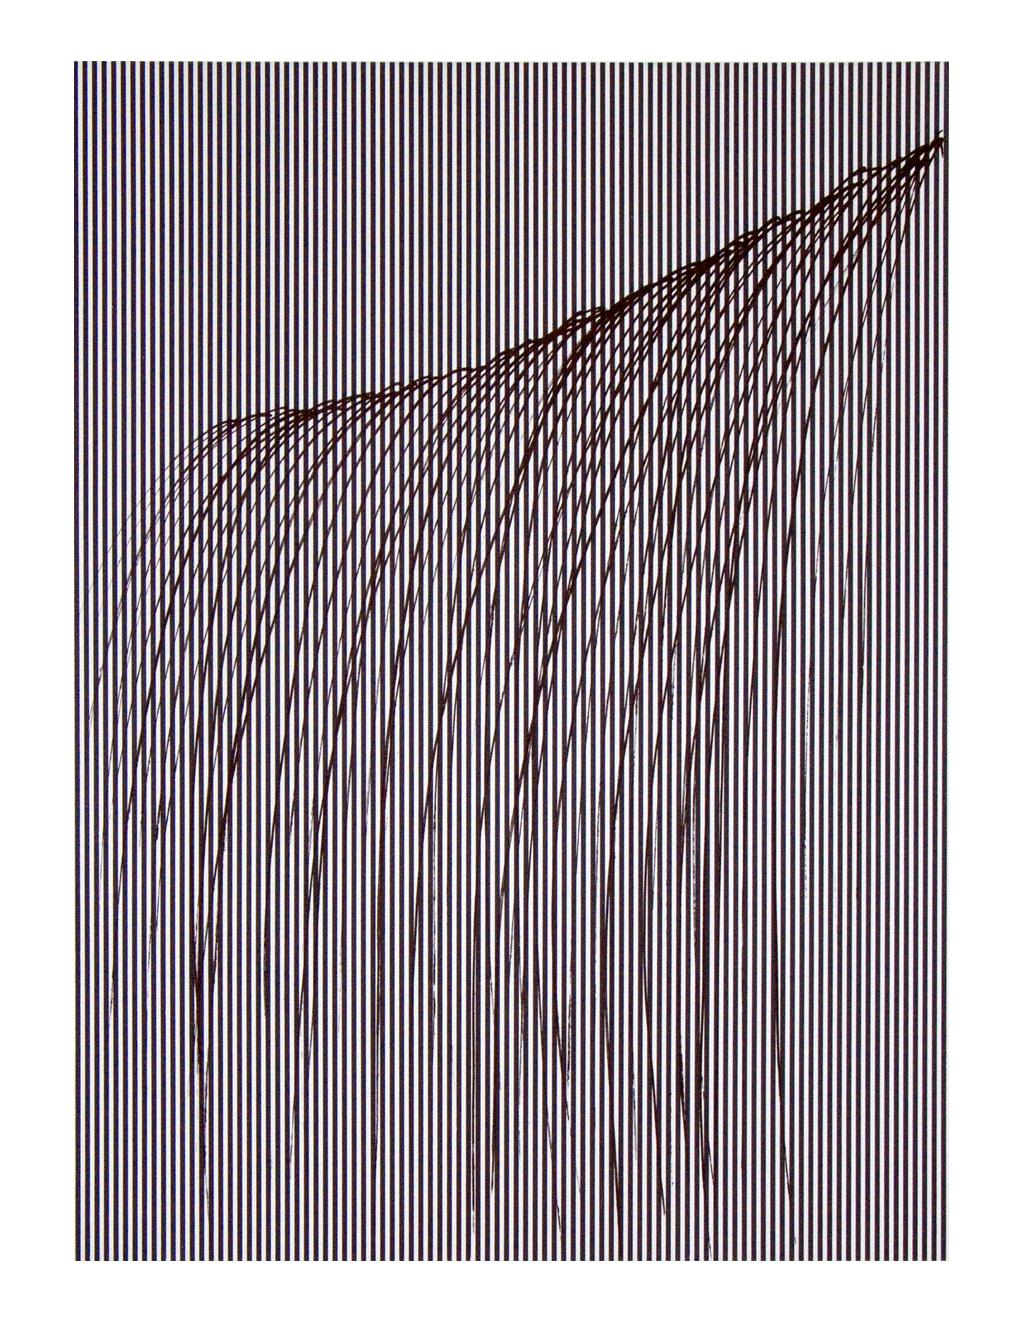 Tom Orr Abstract Print - Waterfall II